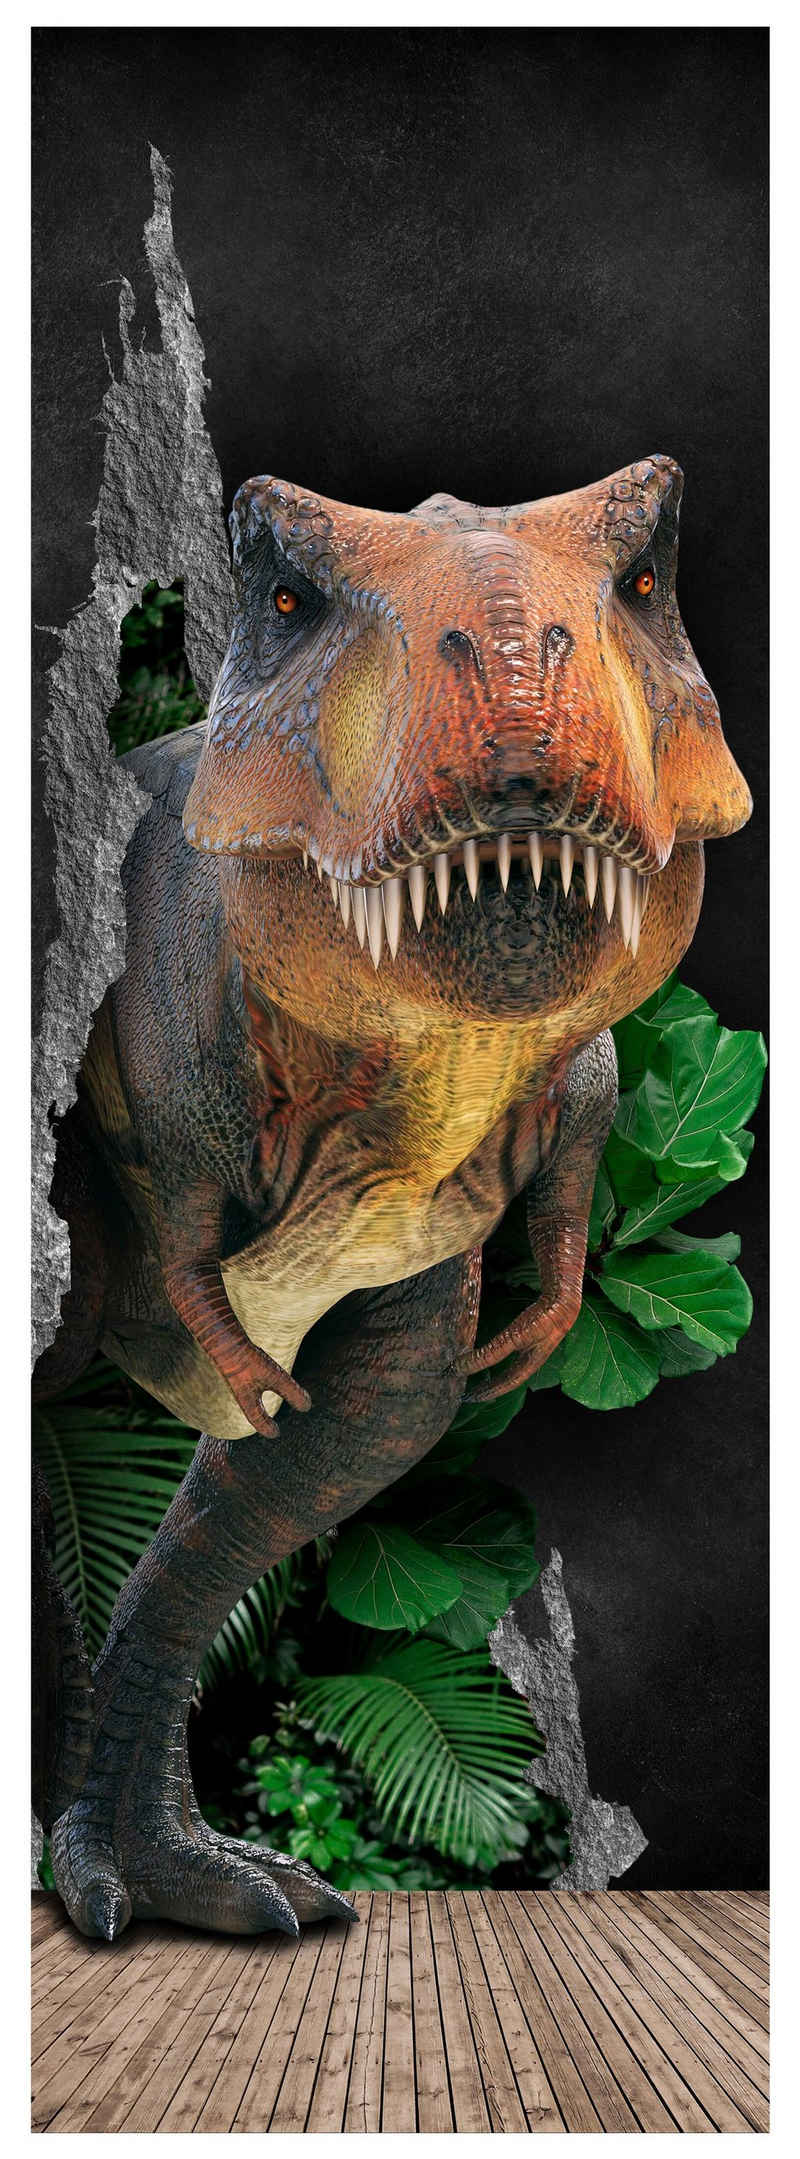 wandmotiv24 Türtapete T-Rex aus dem Dschungel, Dino-saurier, glatt, Fototapete, Wandtapete, Motivtapete, matt, selbstklebende Dekorfolie